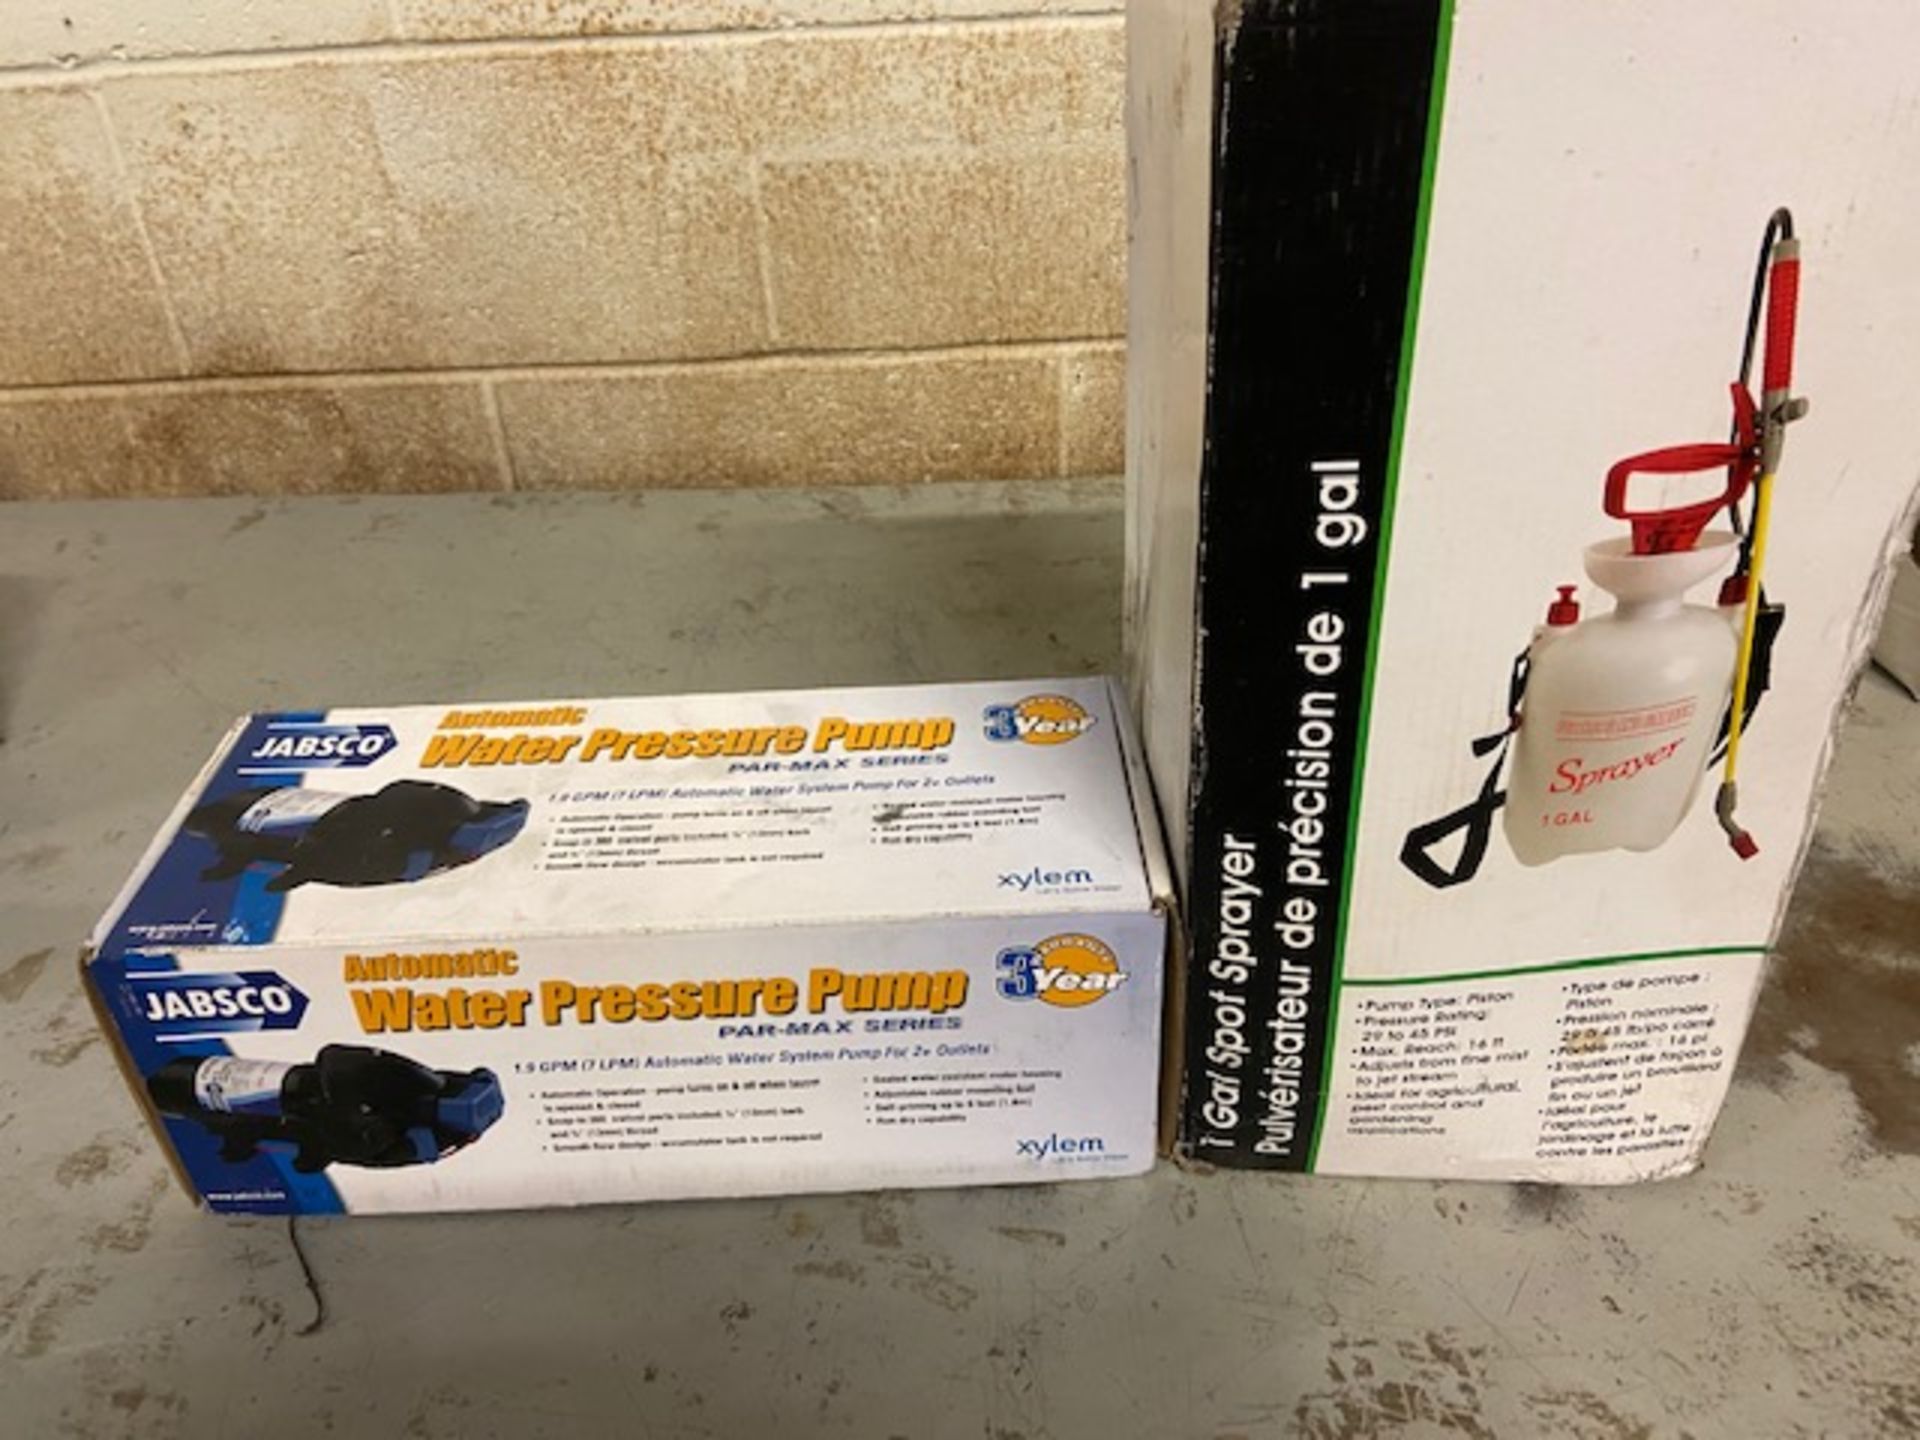 Lot of 2 (2 units) Brand New Water Pressure Pump & 1 Gallon Spot Sprayer